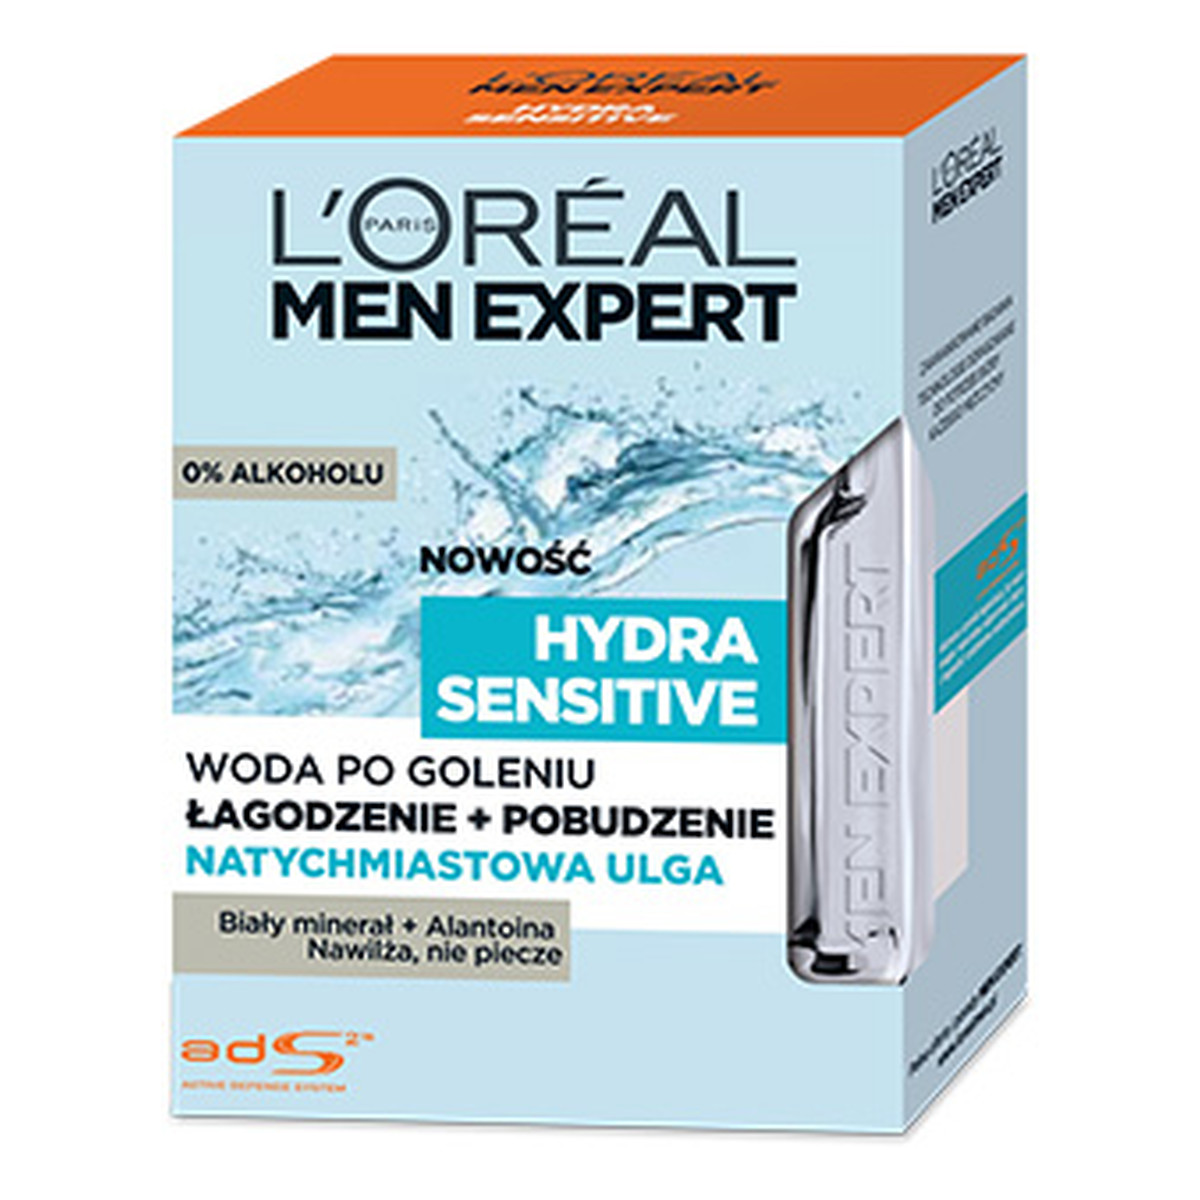 L'Oreal Paris Hydra Sensitive Men Expert Woda Po Goleniu 100ml